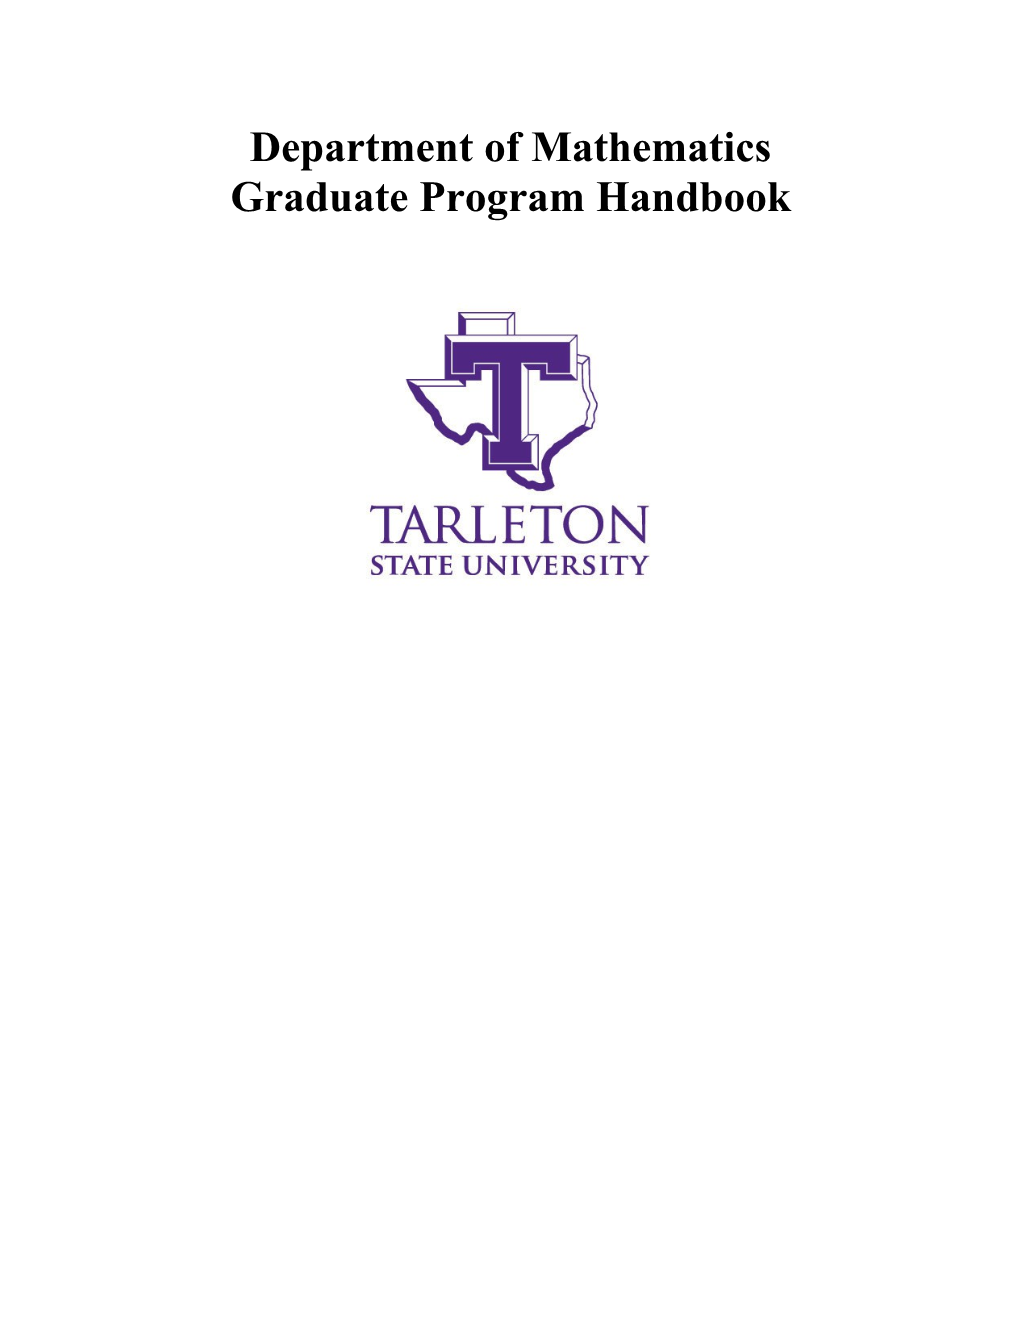 Graduate Program Handbook Template